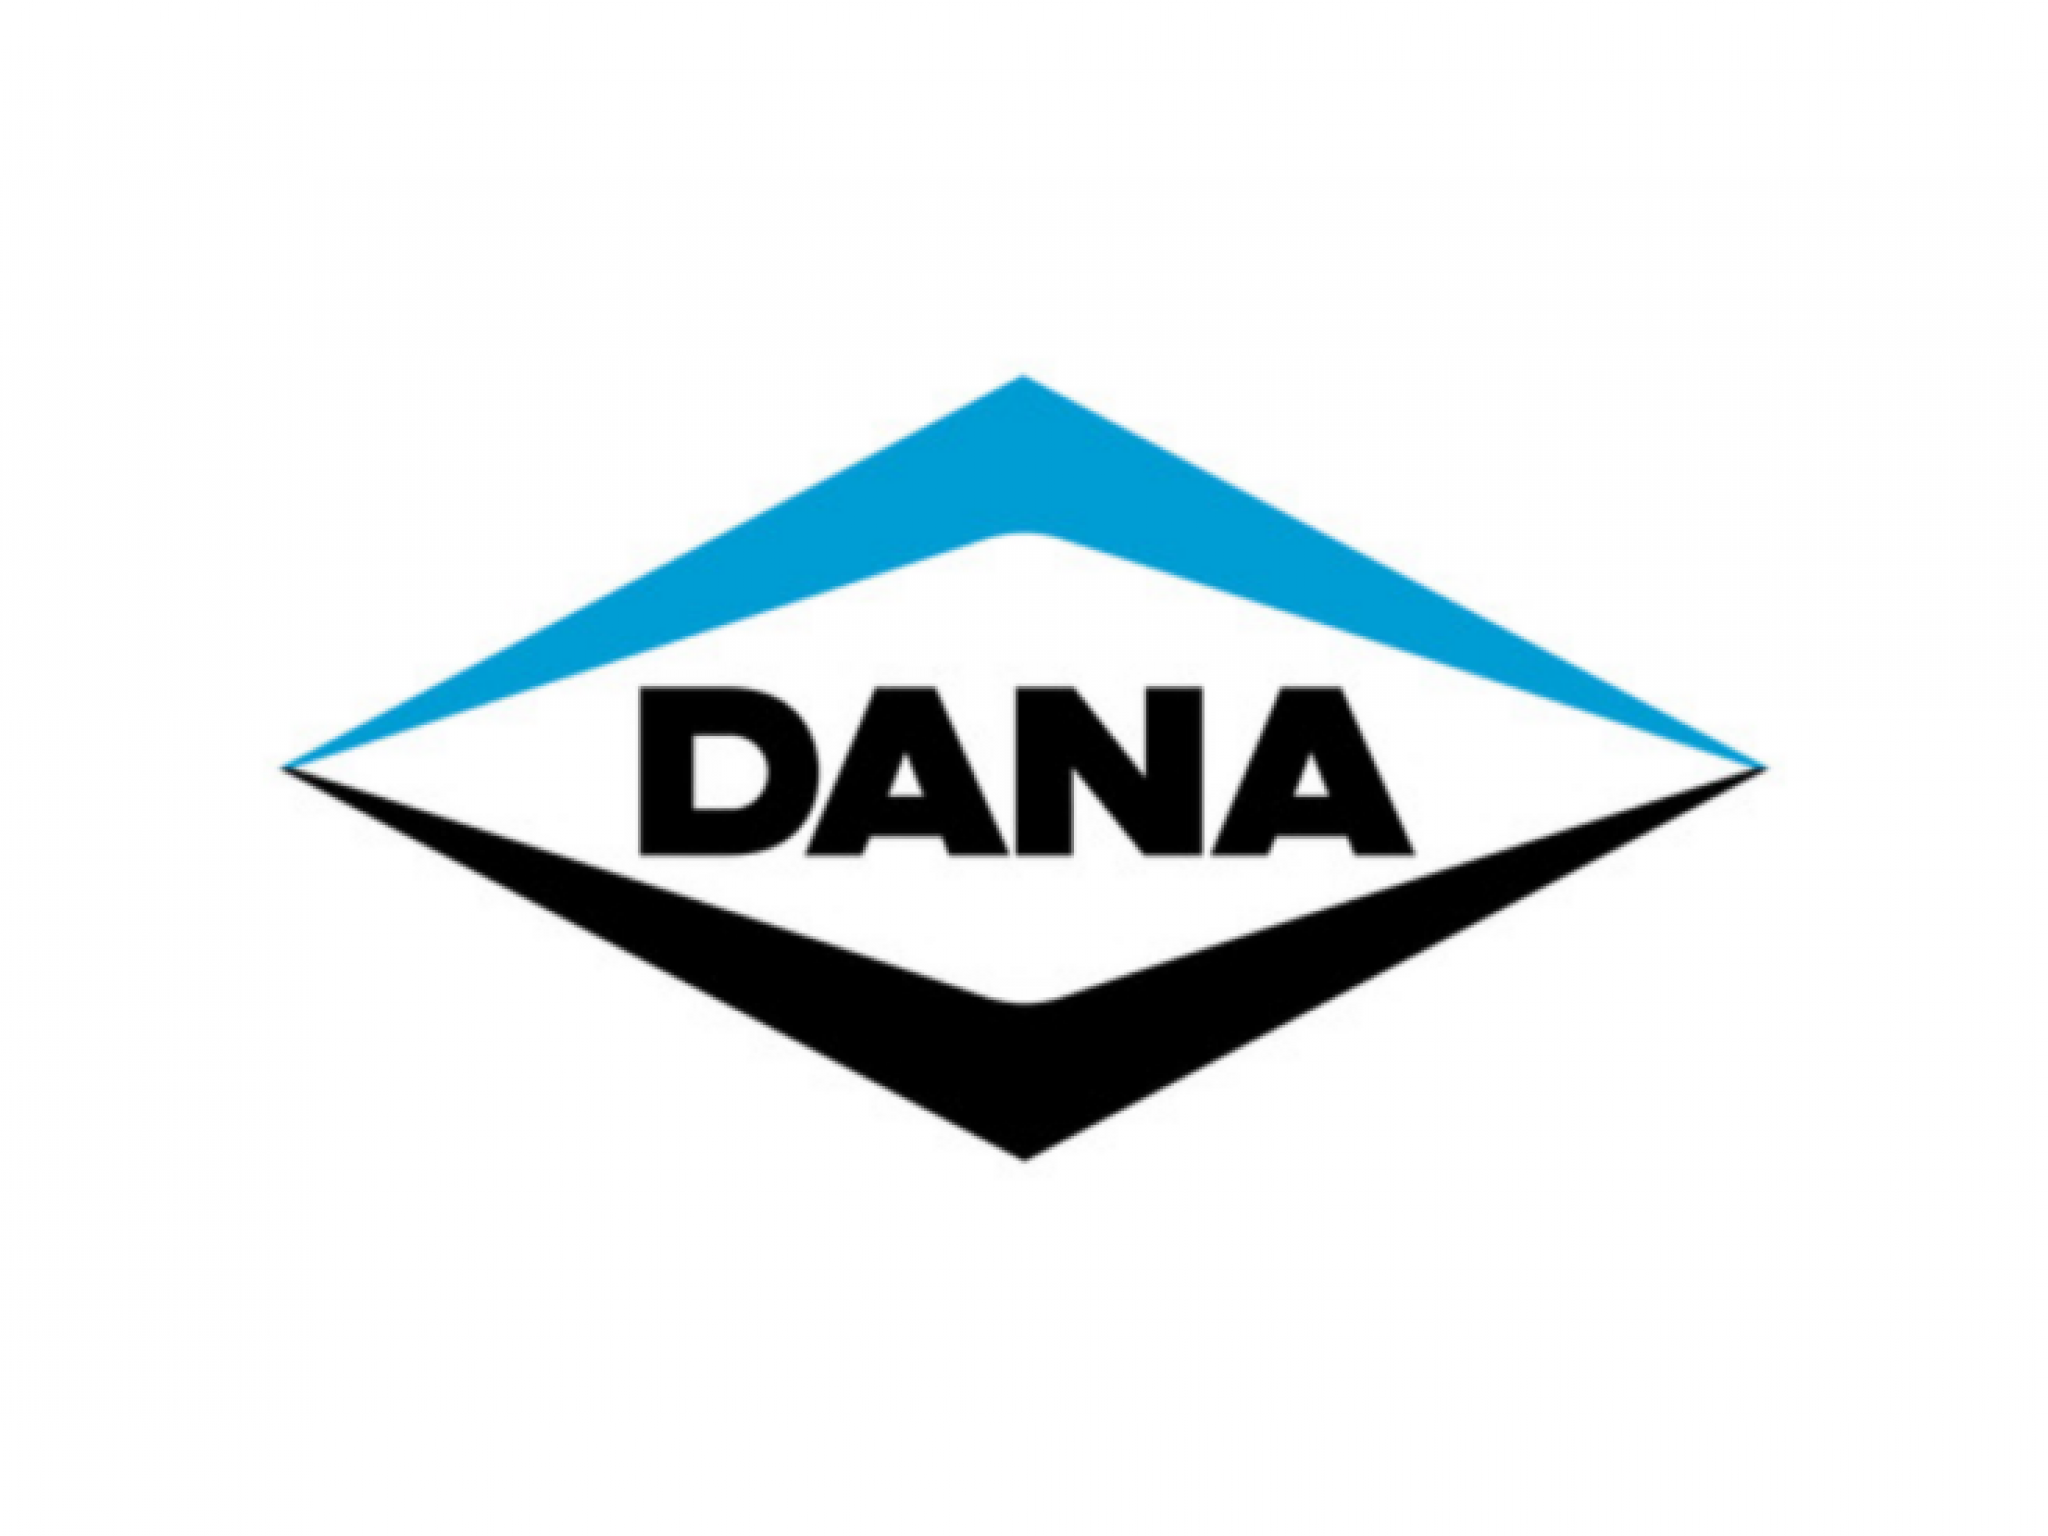  dana-divests-european-hydraulics-business-to-hpi-group-to-streamline-portfolio 